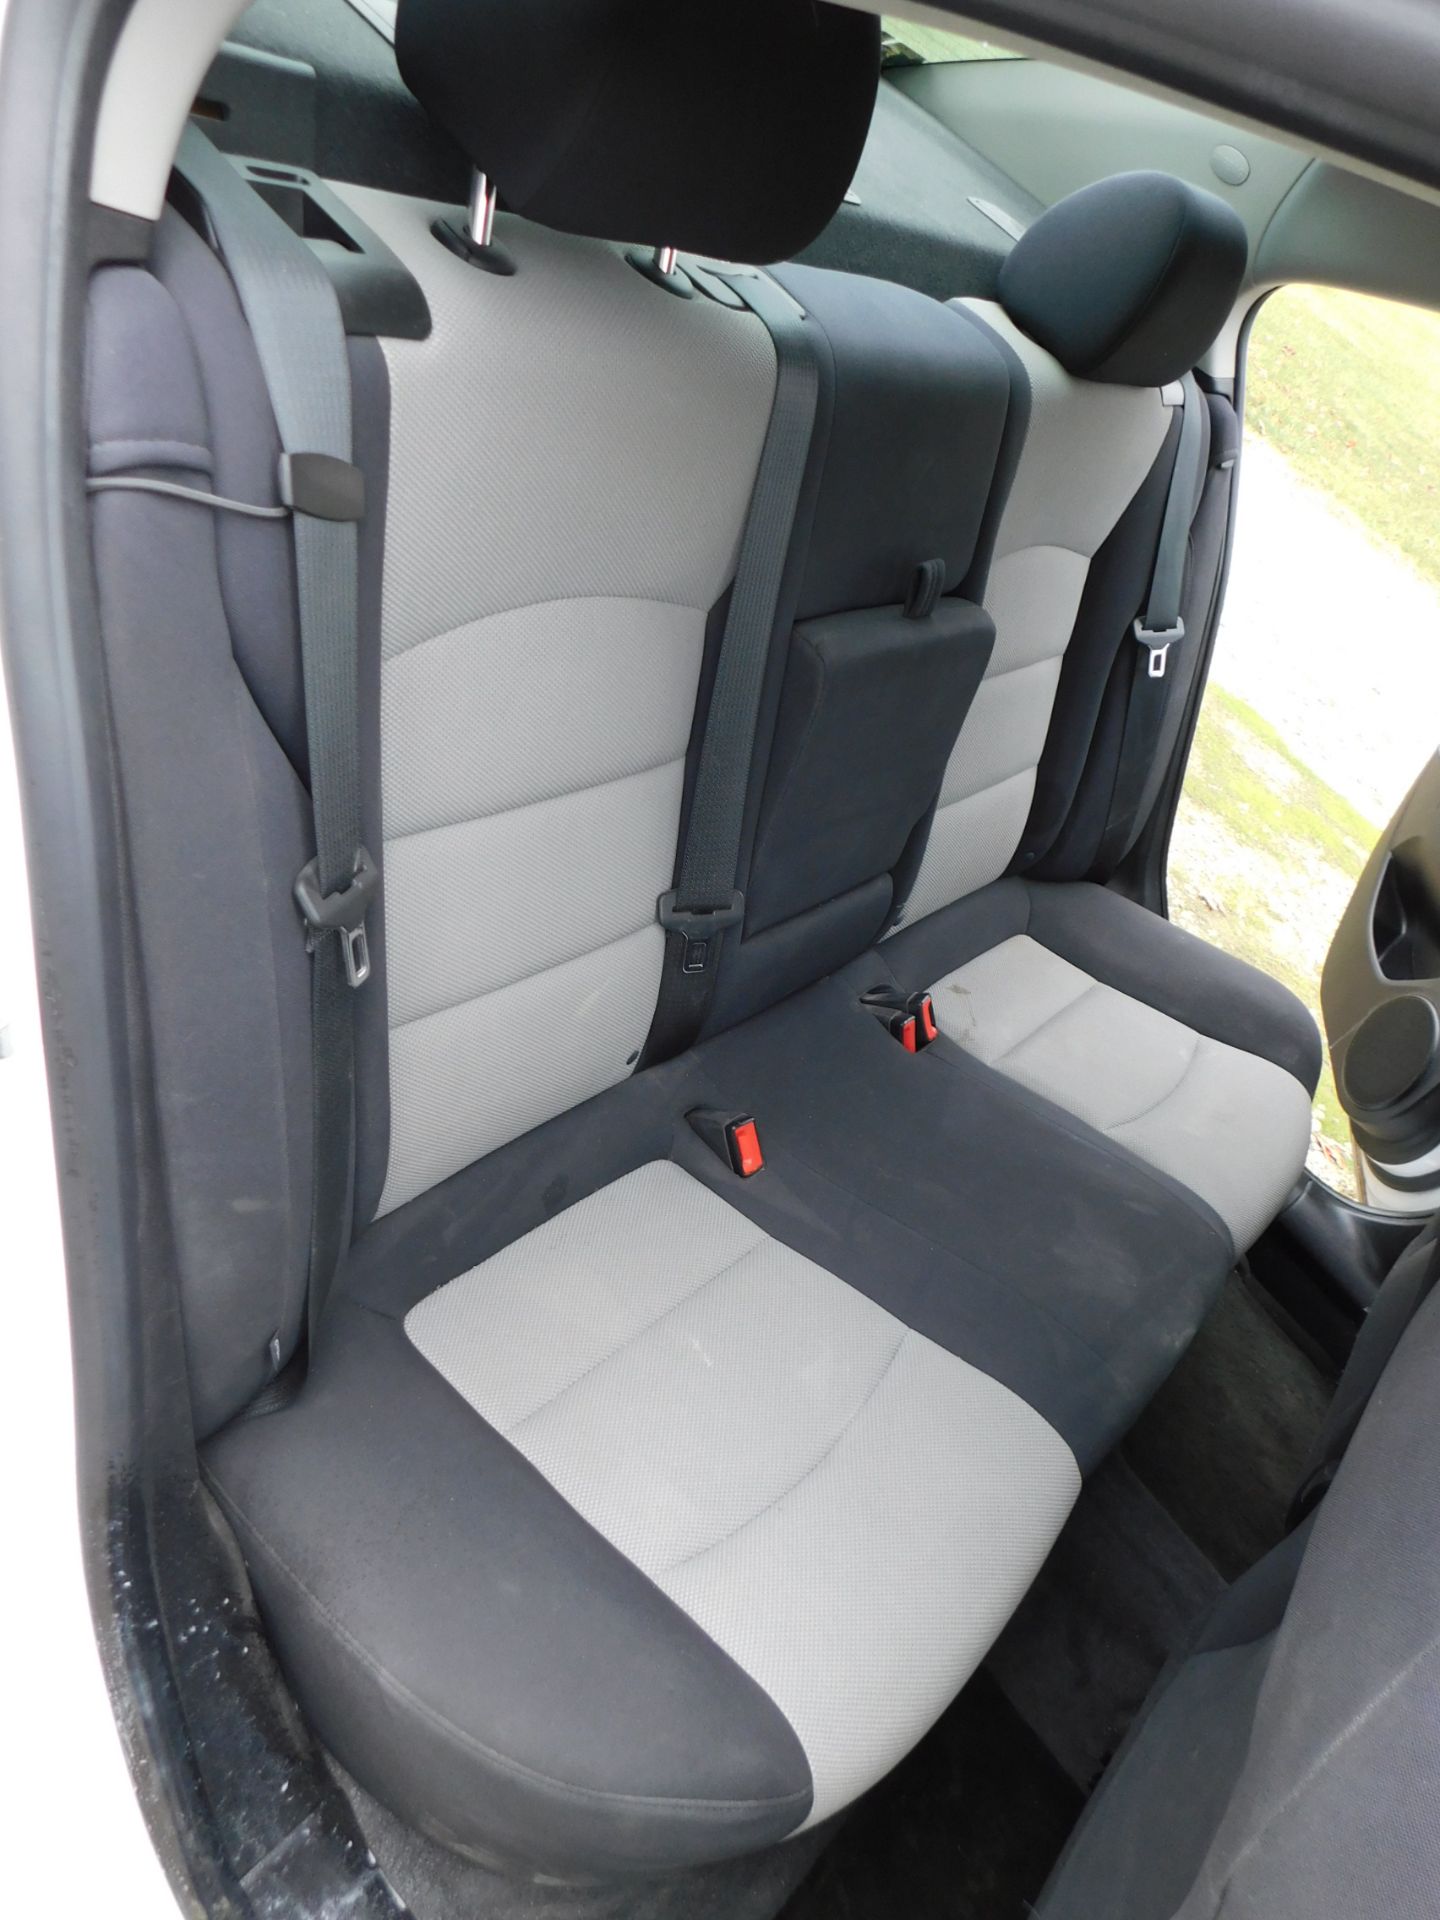 2014 Chevrolet Cruze 4-Door Sedan, VIN 1G1PA5SH1E7315697, AM/FM, AC, Cruise Control, PW, PL, 111,323 - Image 31 of 41